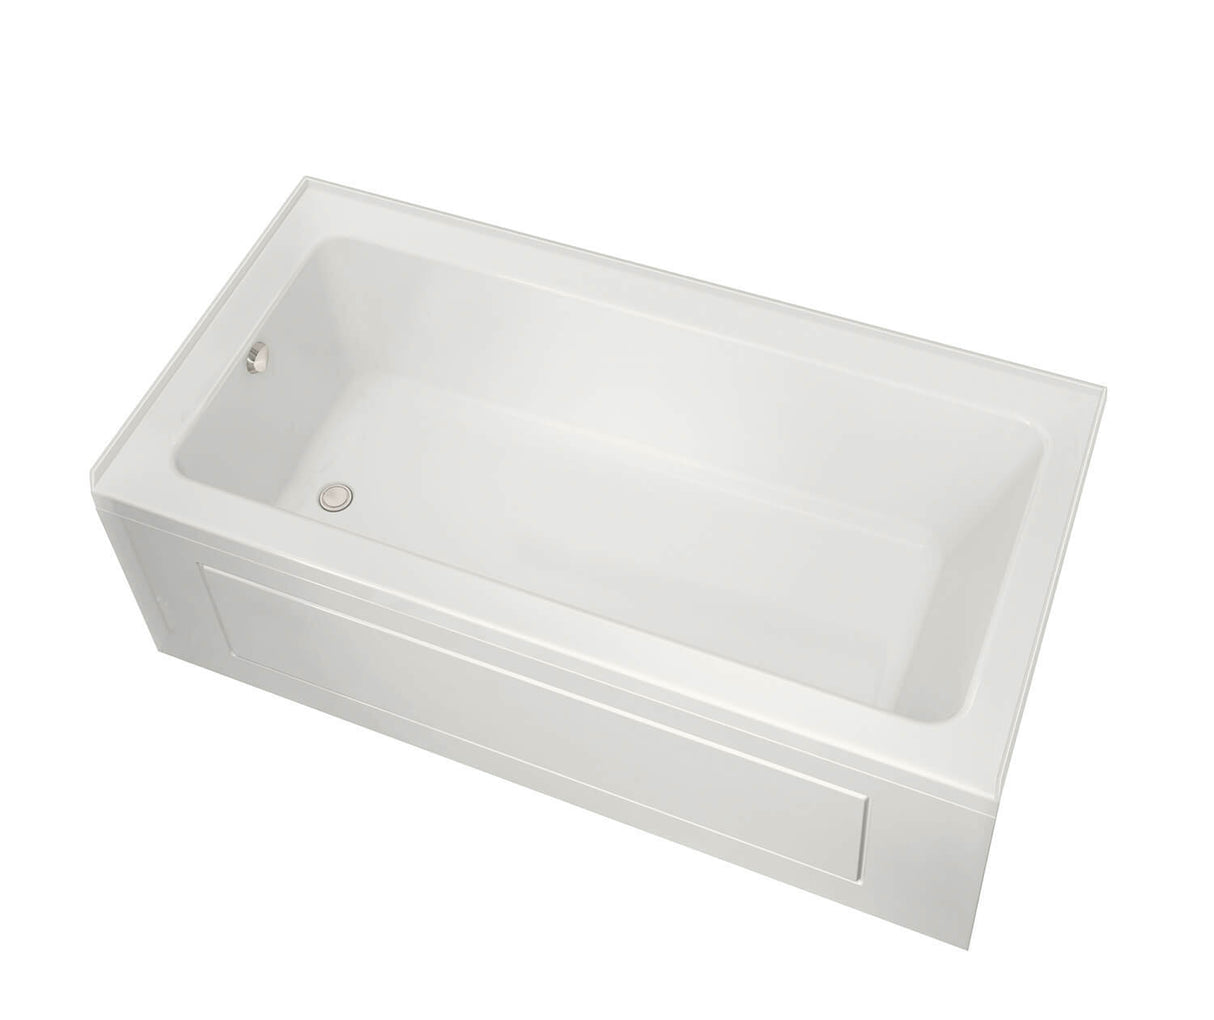 MAAX 106198-000-001-103 Pose 6030 IF Acrylic Alcove Left-Hand Drain Bathtub in White